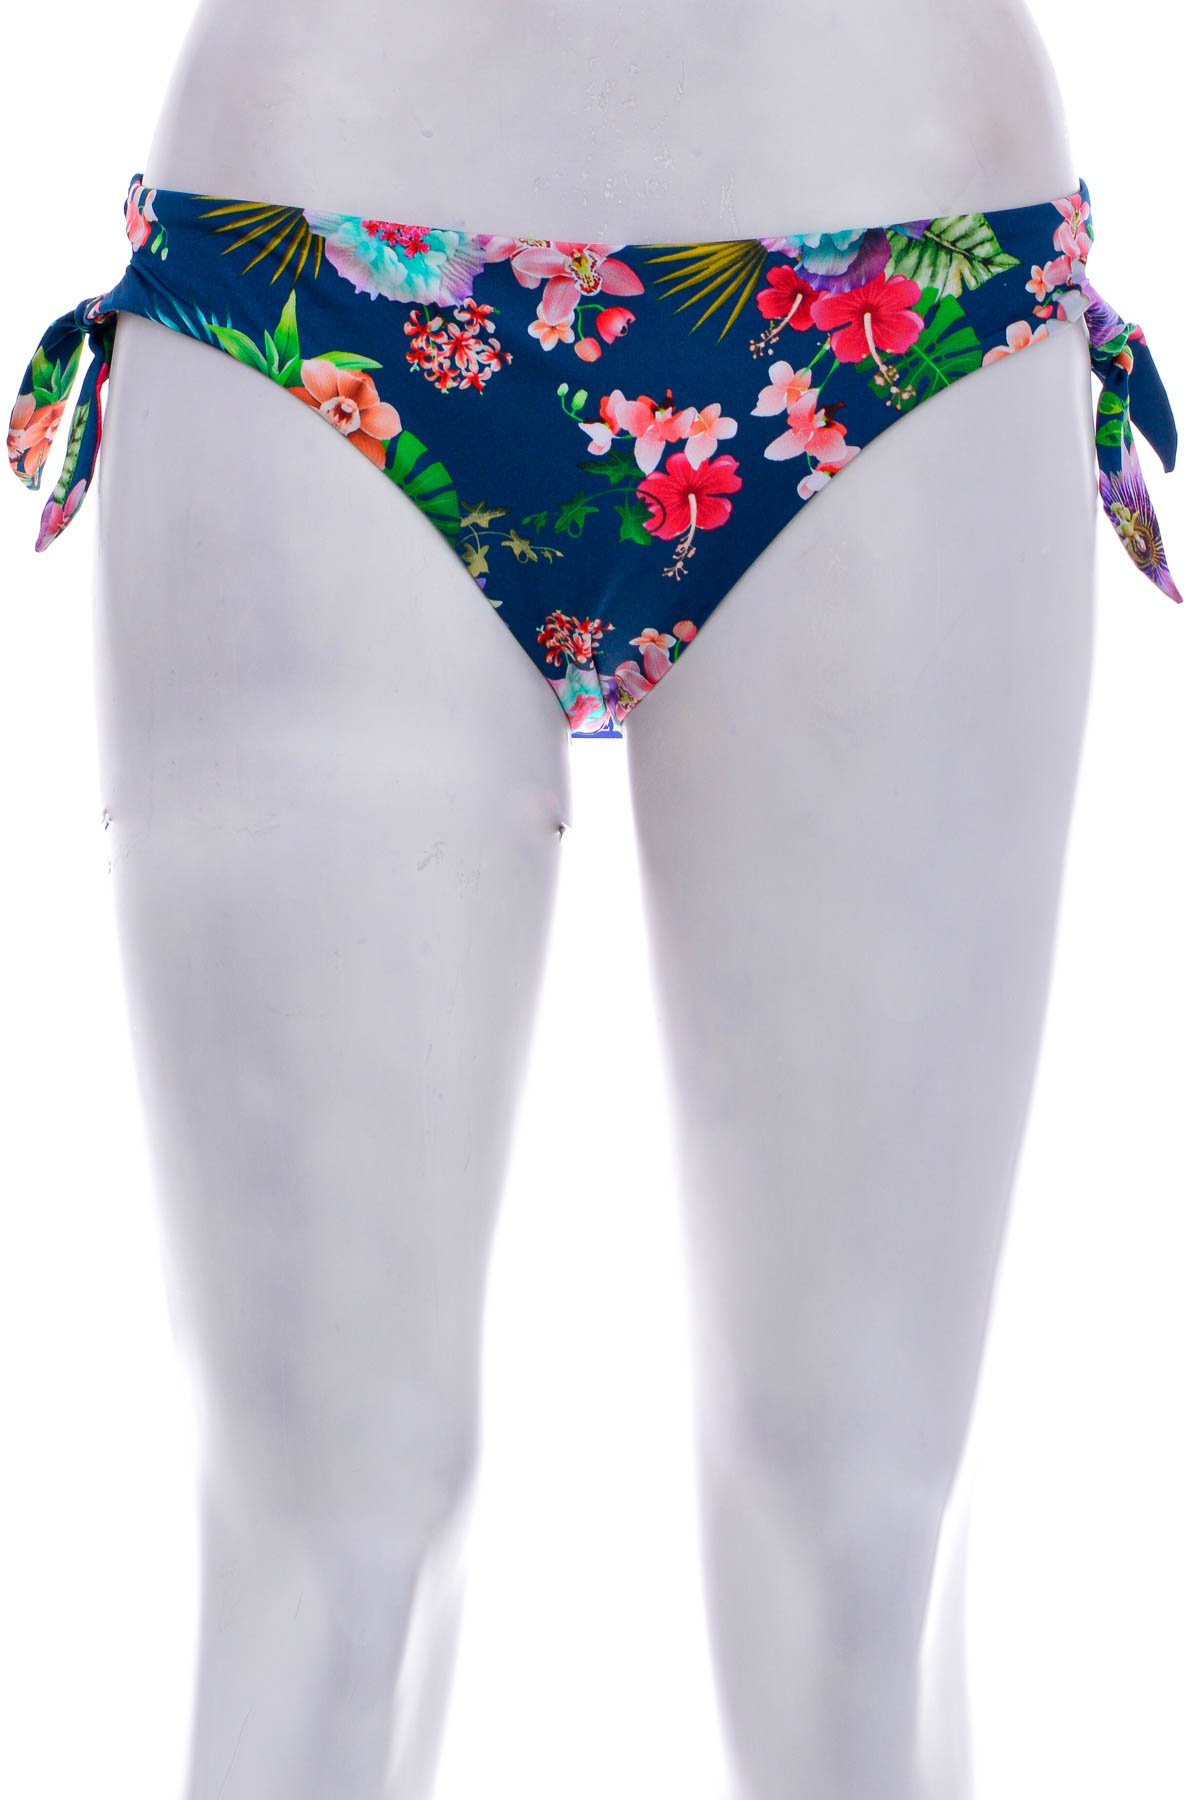 Women's swimsuit bottoms - Cyell - 0